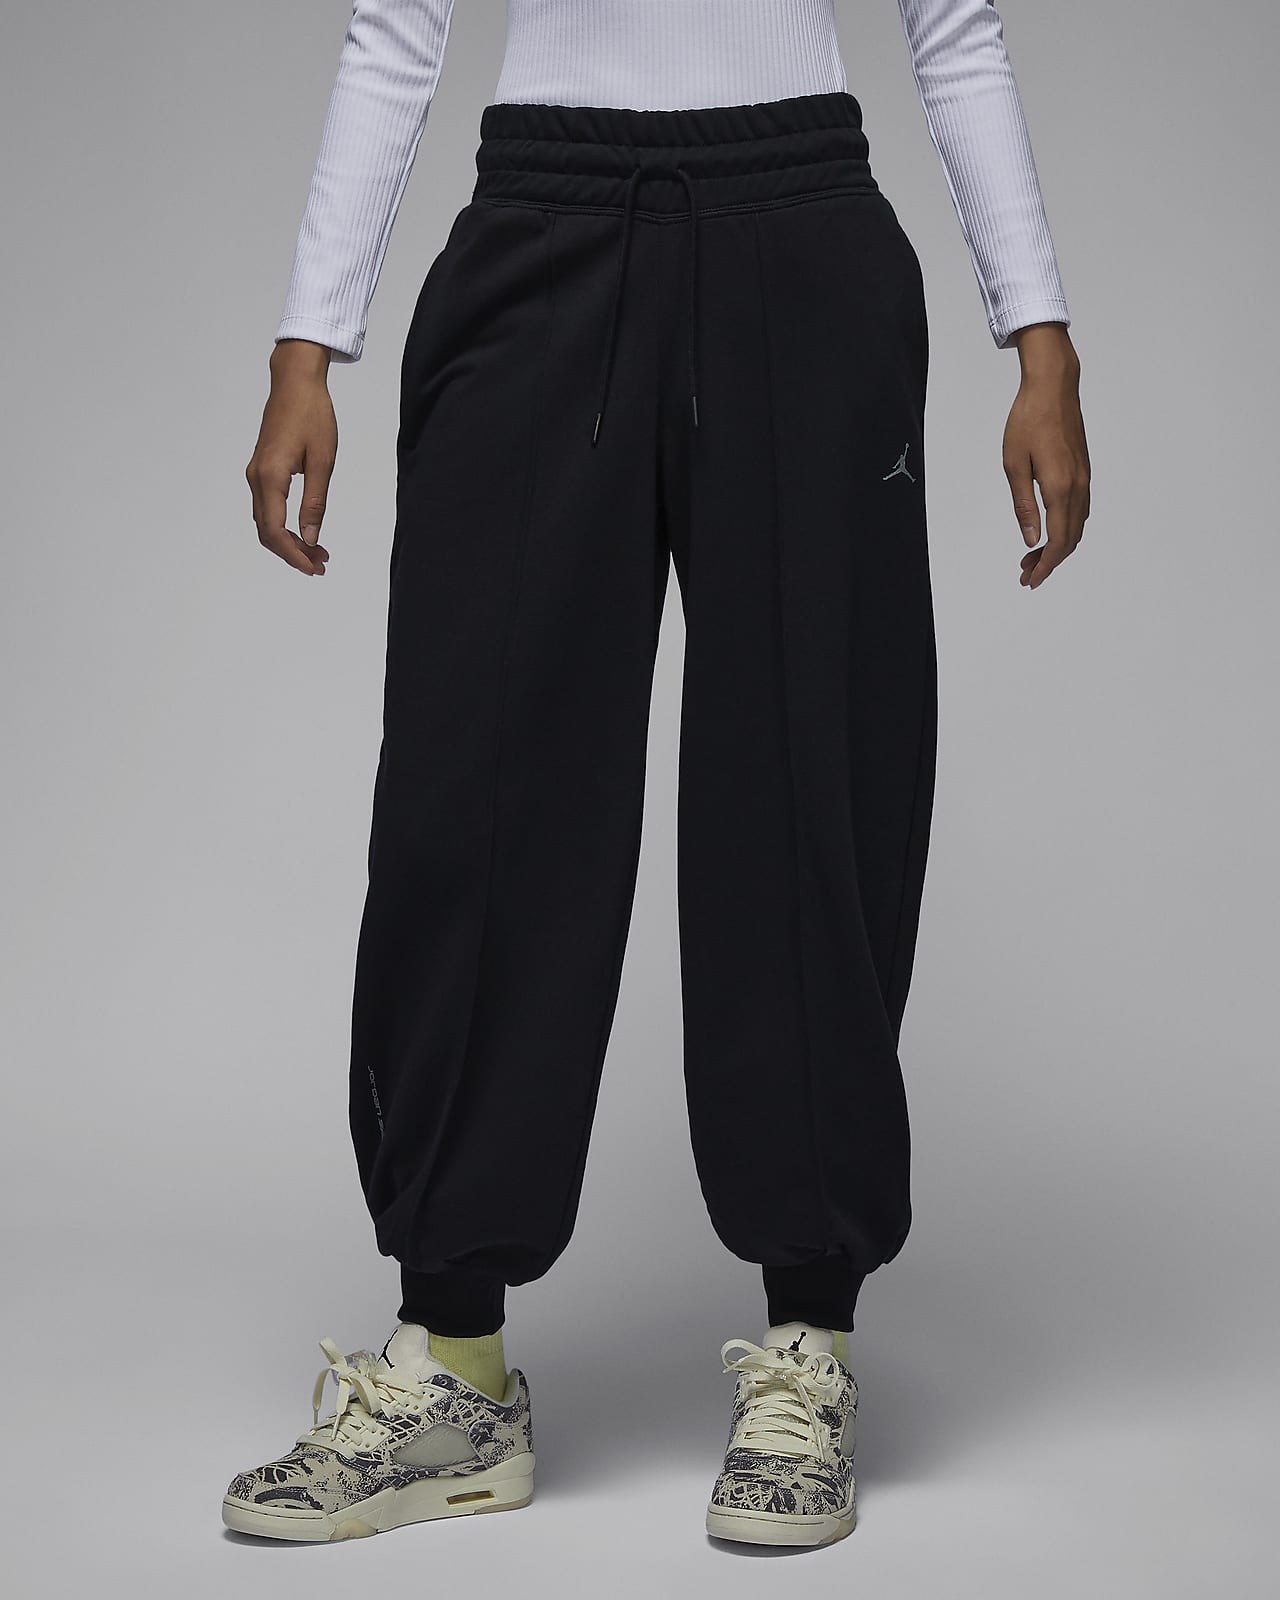 Jordan Sport Women's Fleece Pants